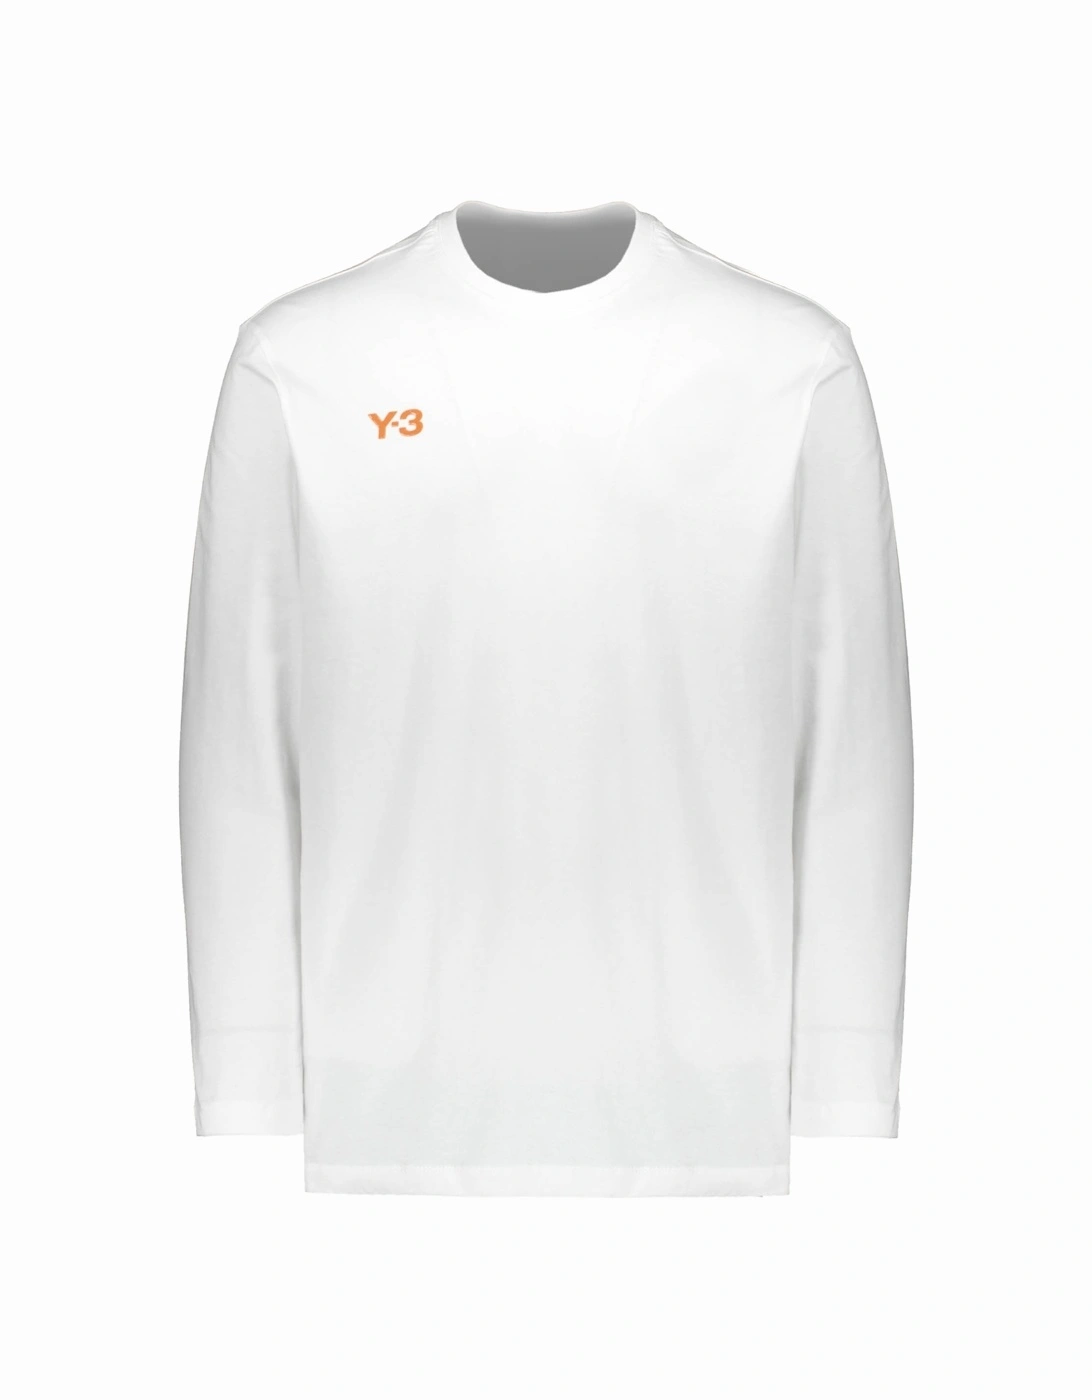 Y3 GFX Long Sleeve Tee - White, 4 of 3